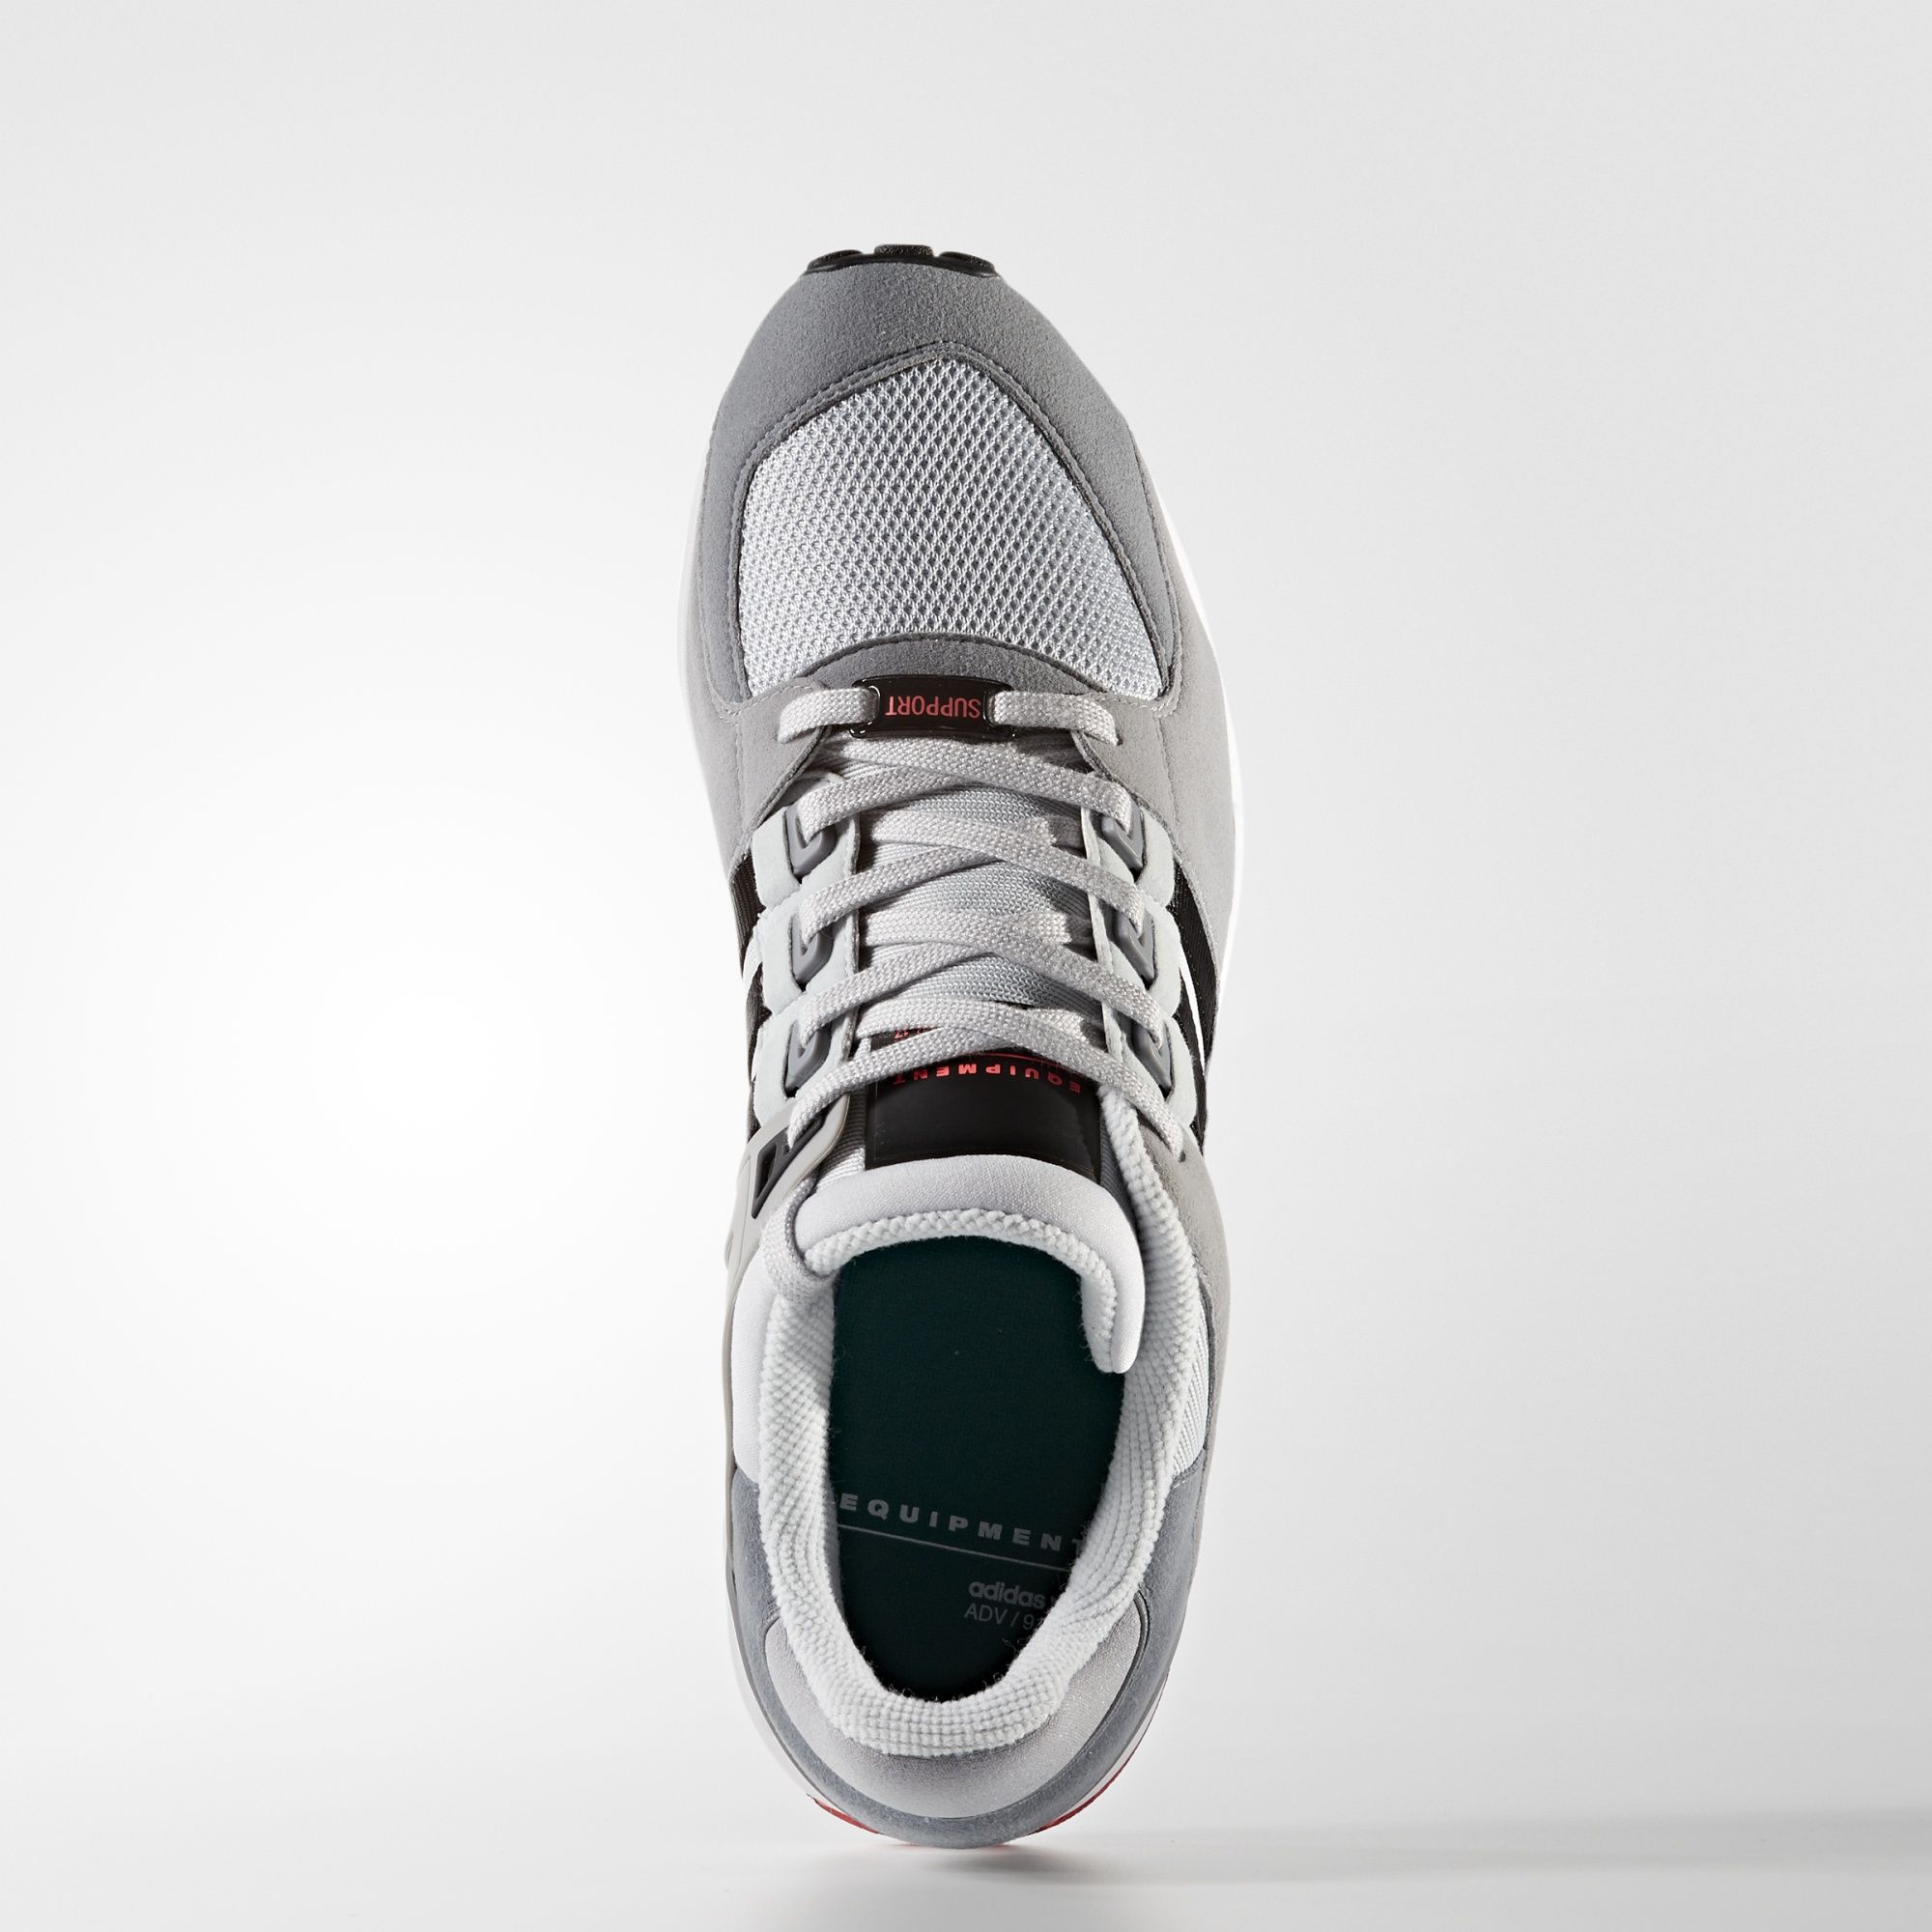 Adidas EQT Support RF
Light Onix / Core Black / Grey